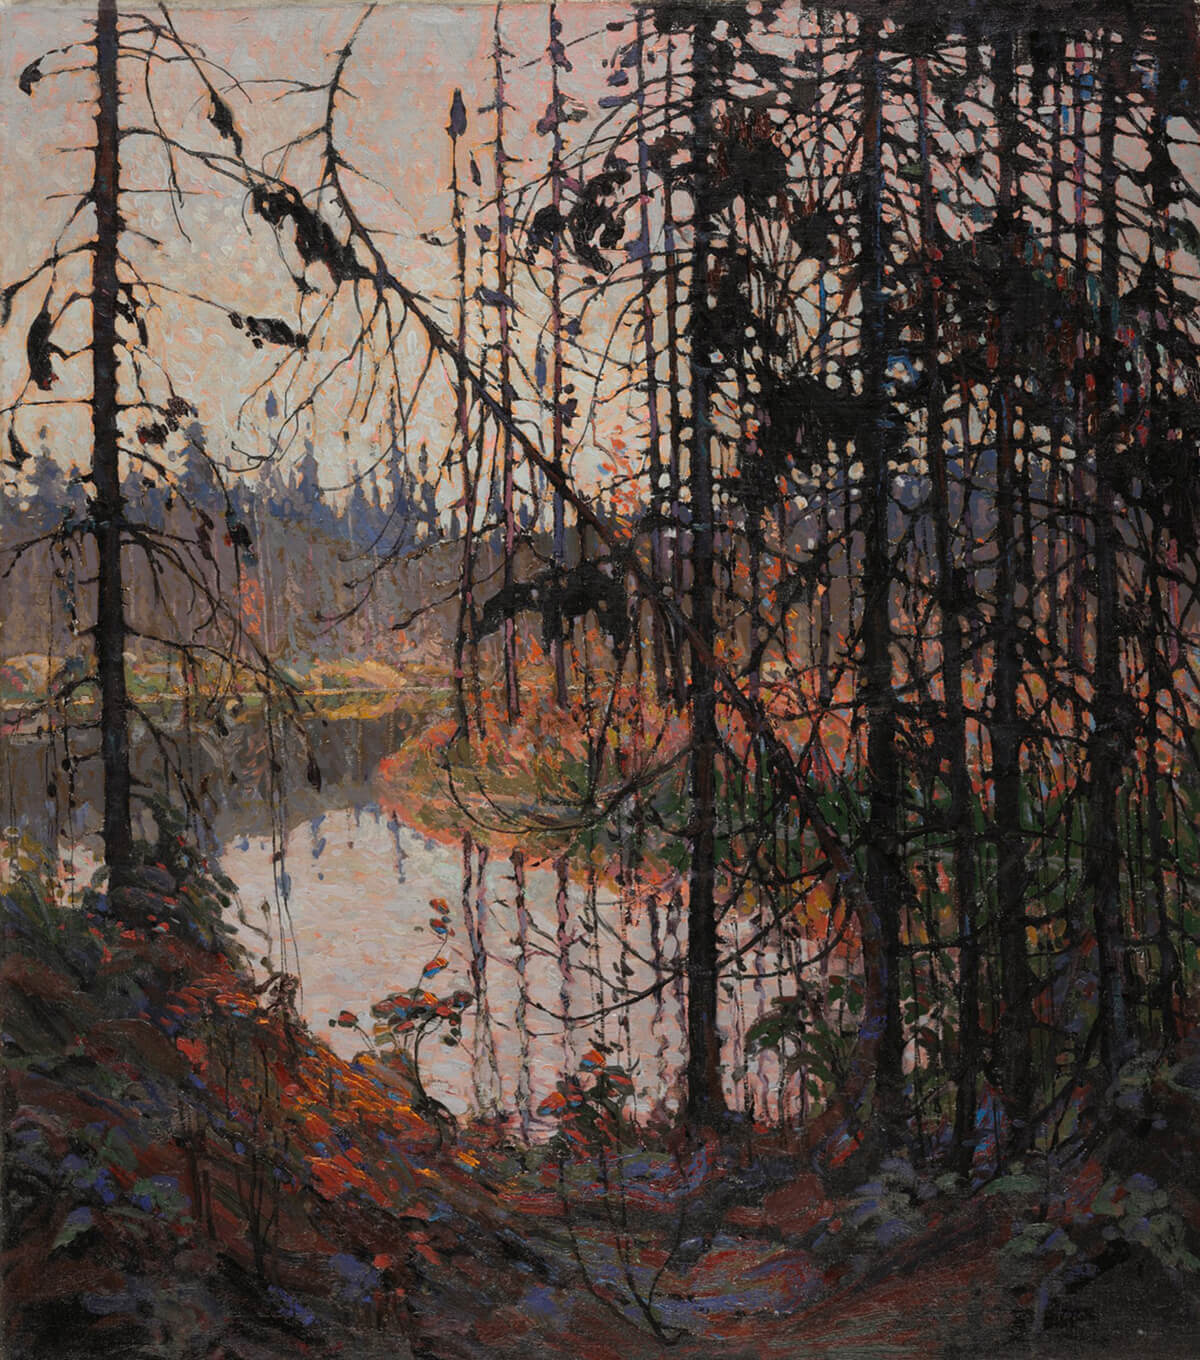 Tom Thomson, Northern River, 1914–15